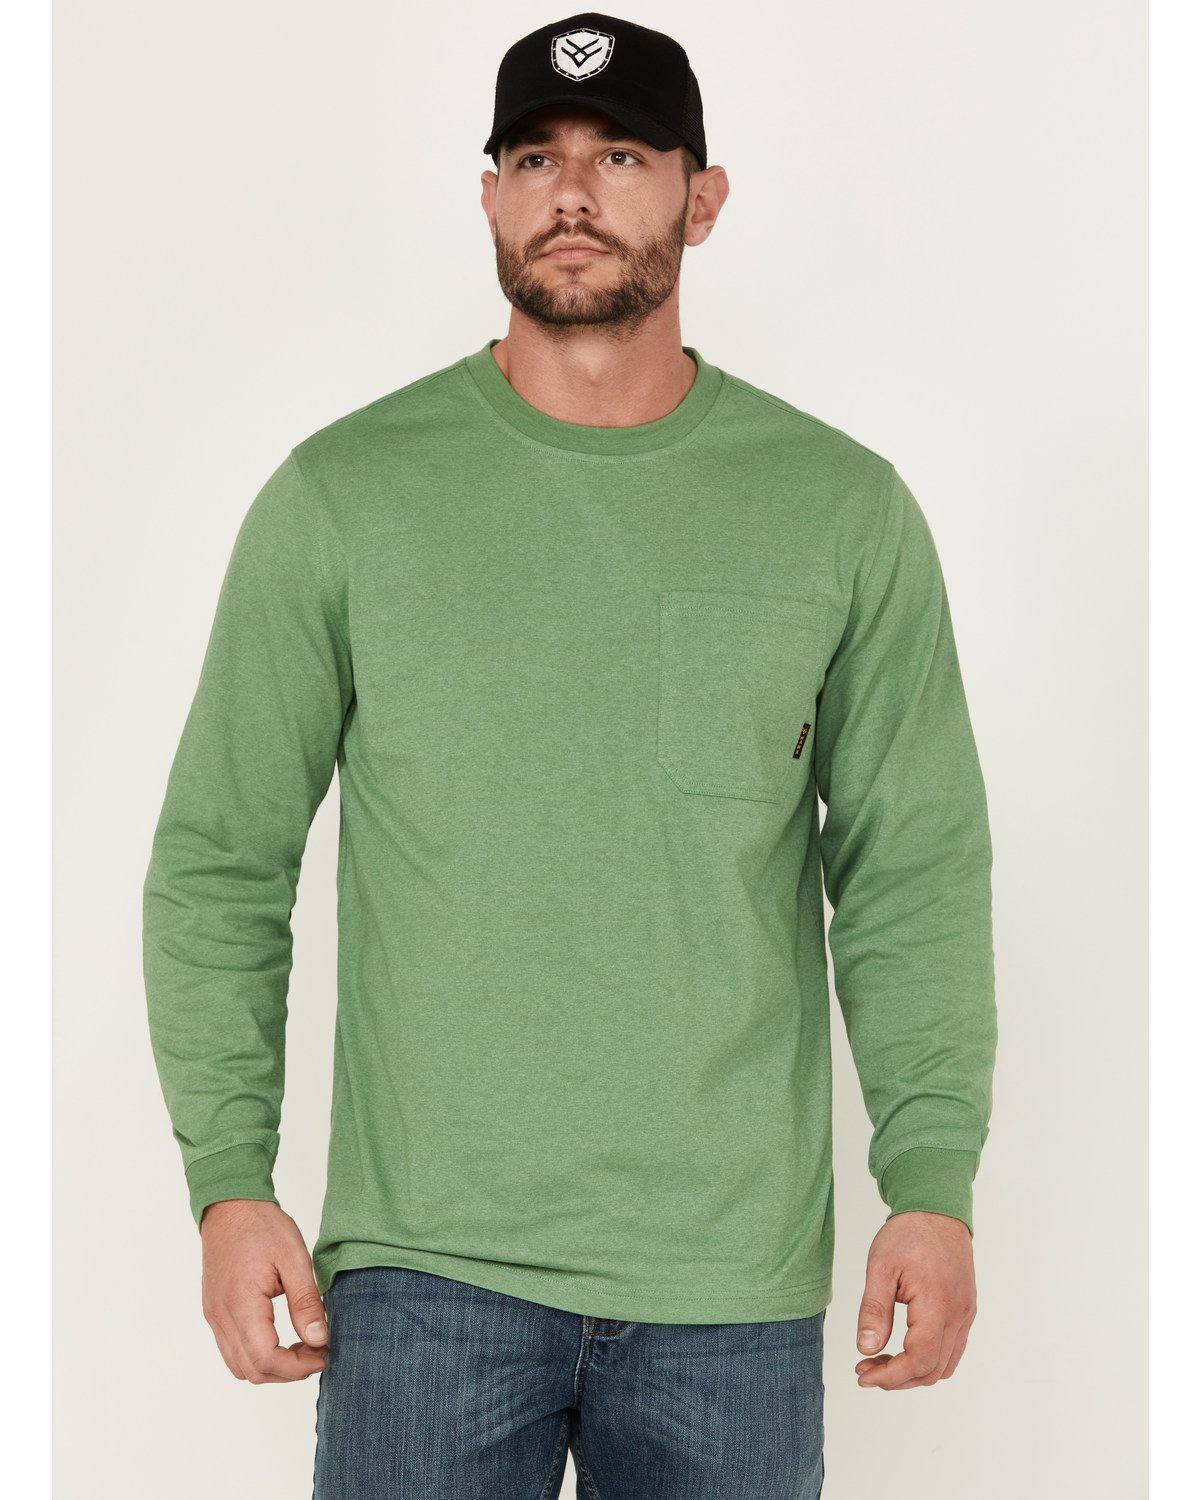 Hawx Men's Forge Long Sleeve Pocket T-Shirt